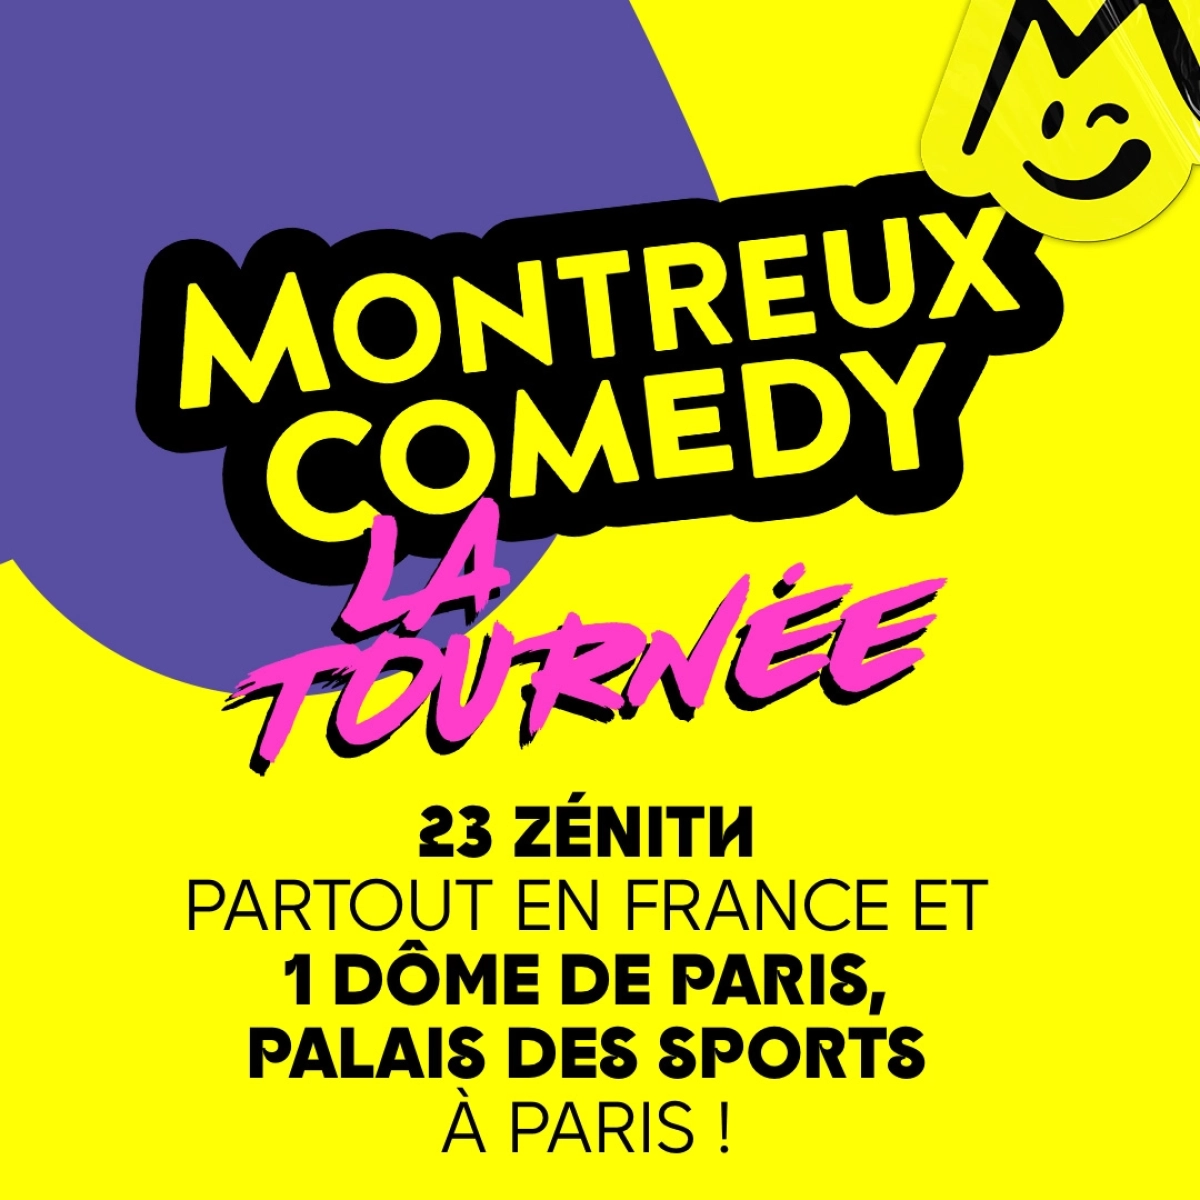 Montreux Comedy - La Tournee at Zenith Strasbourg Tickets